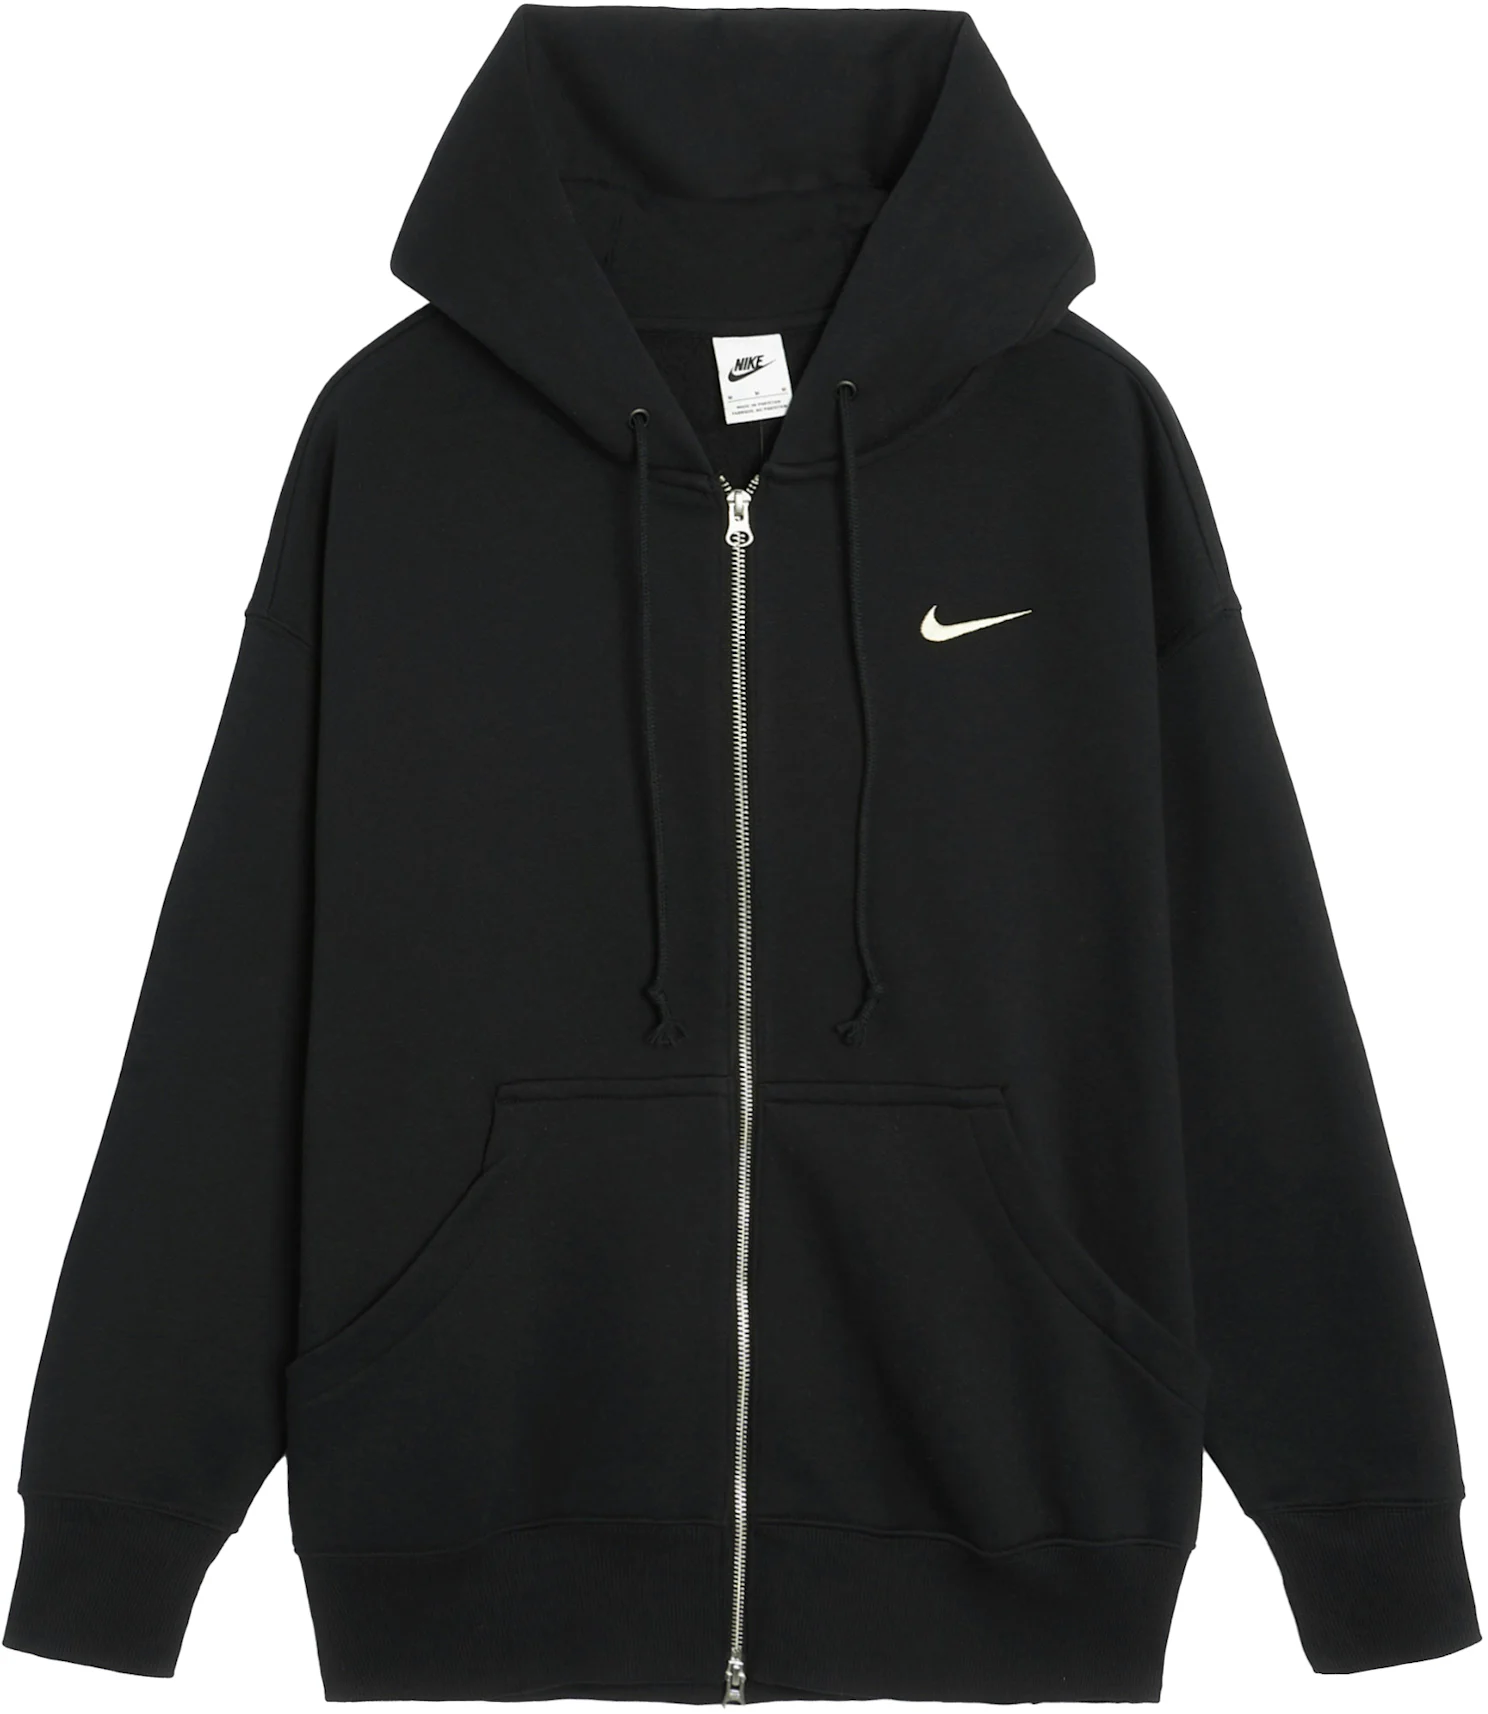 Nike Phoenix Fleece oversized hoodie in black